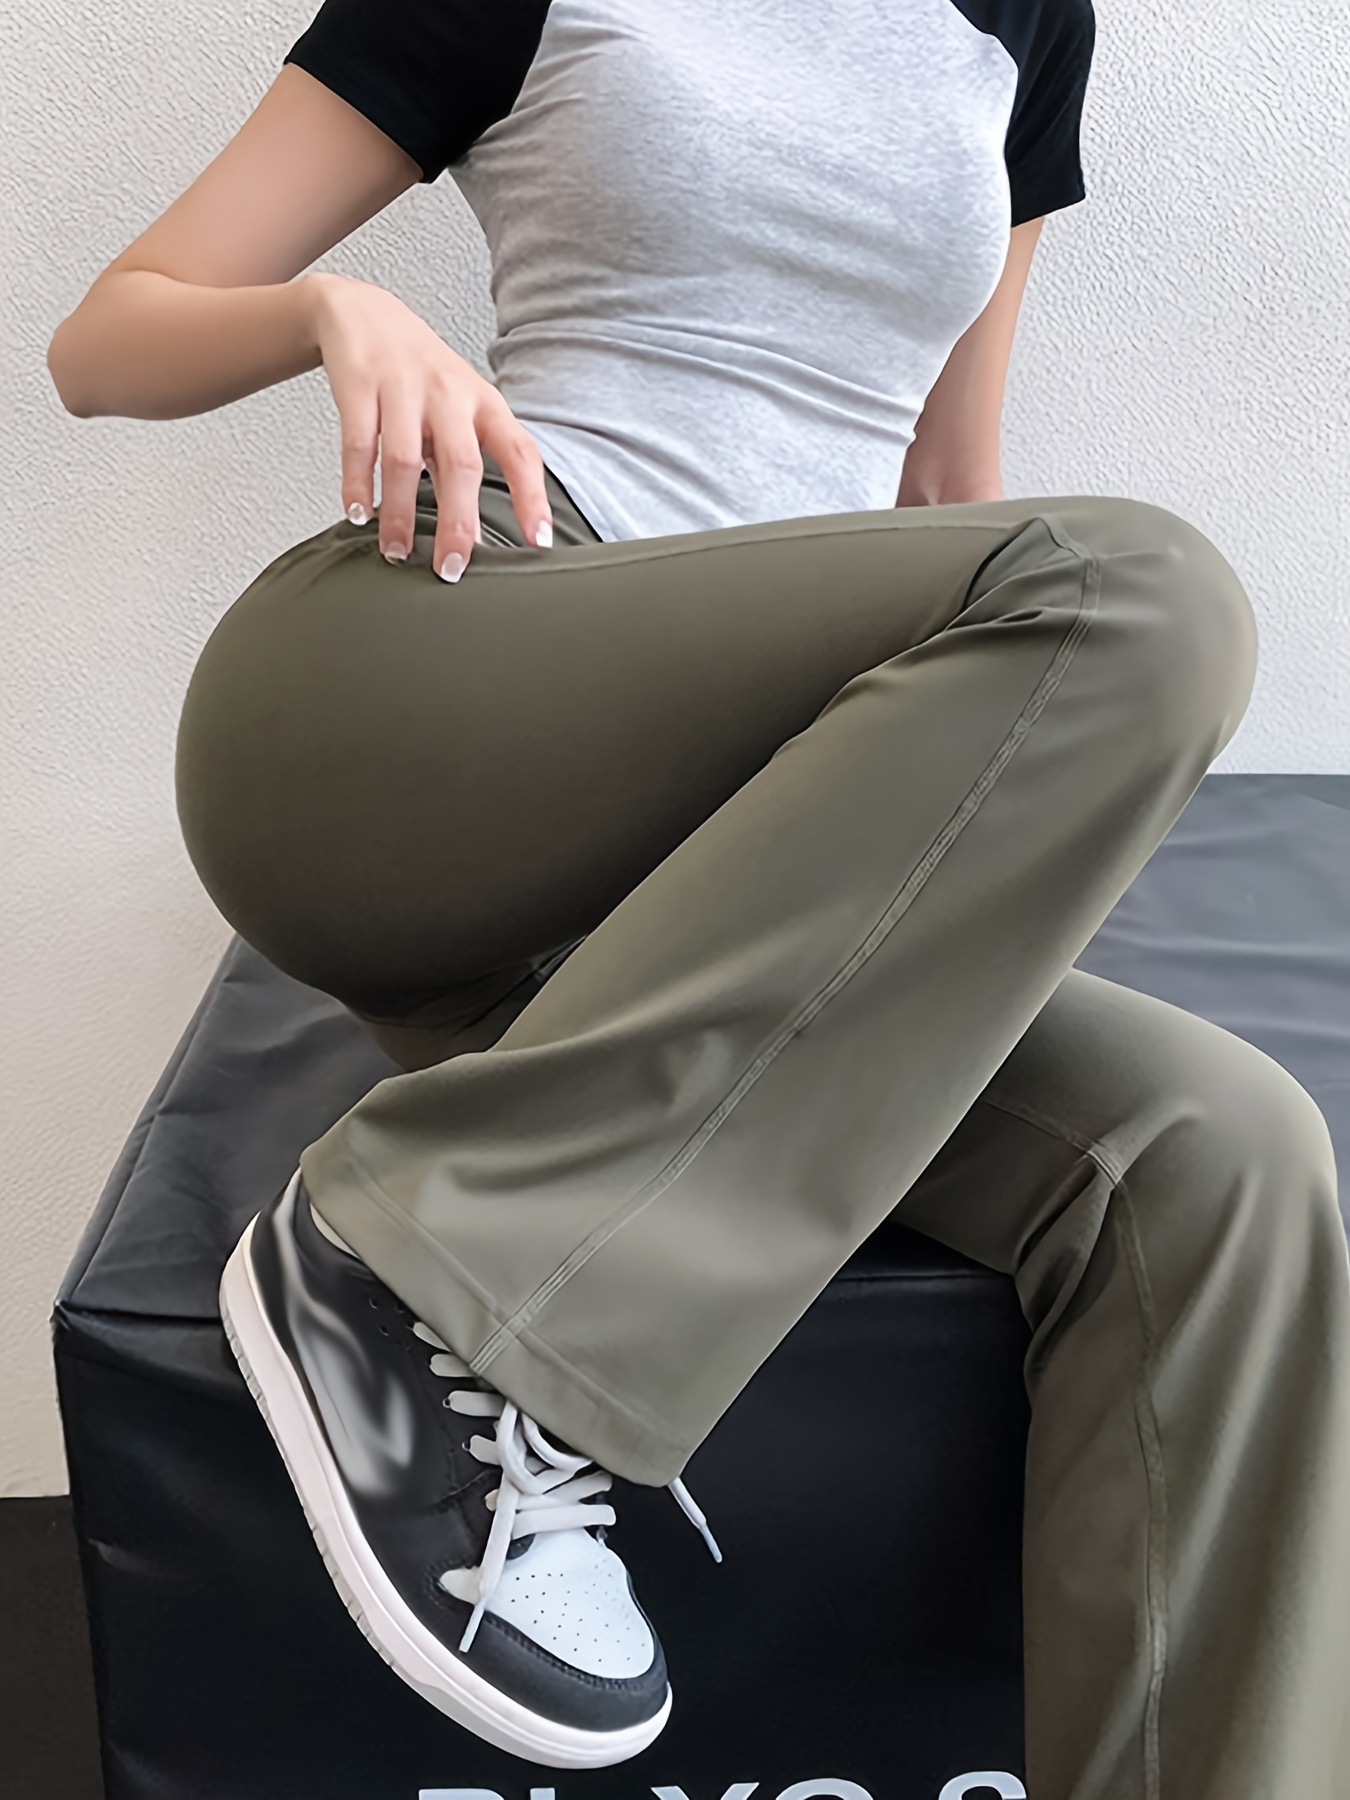 Breniney Bottom Pants Pants Yoga Leggings Slim Fashion Cothes